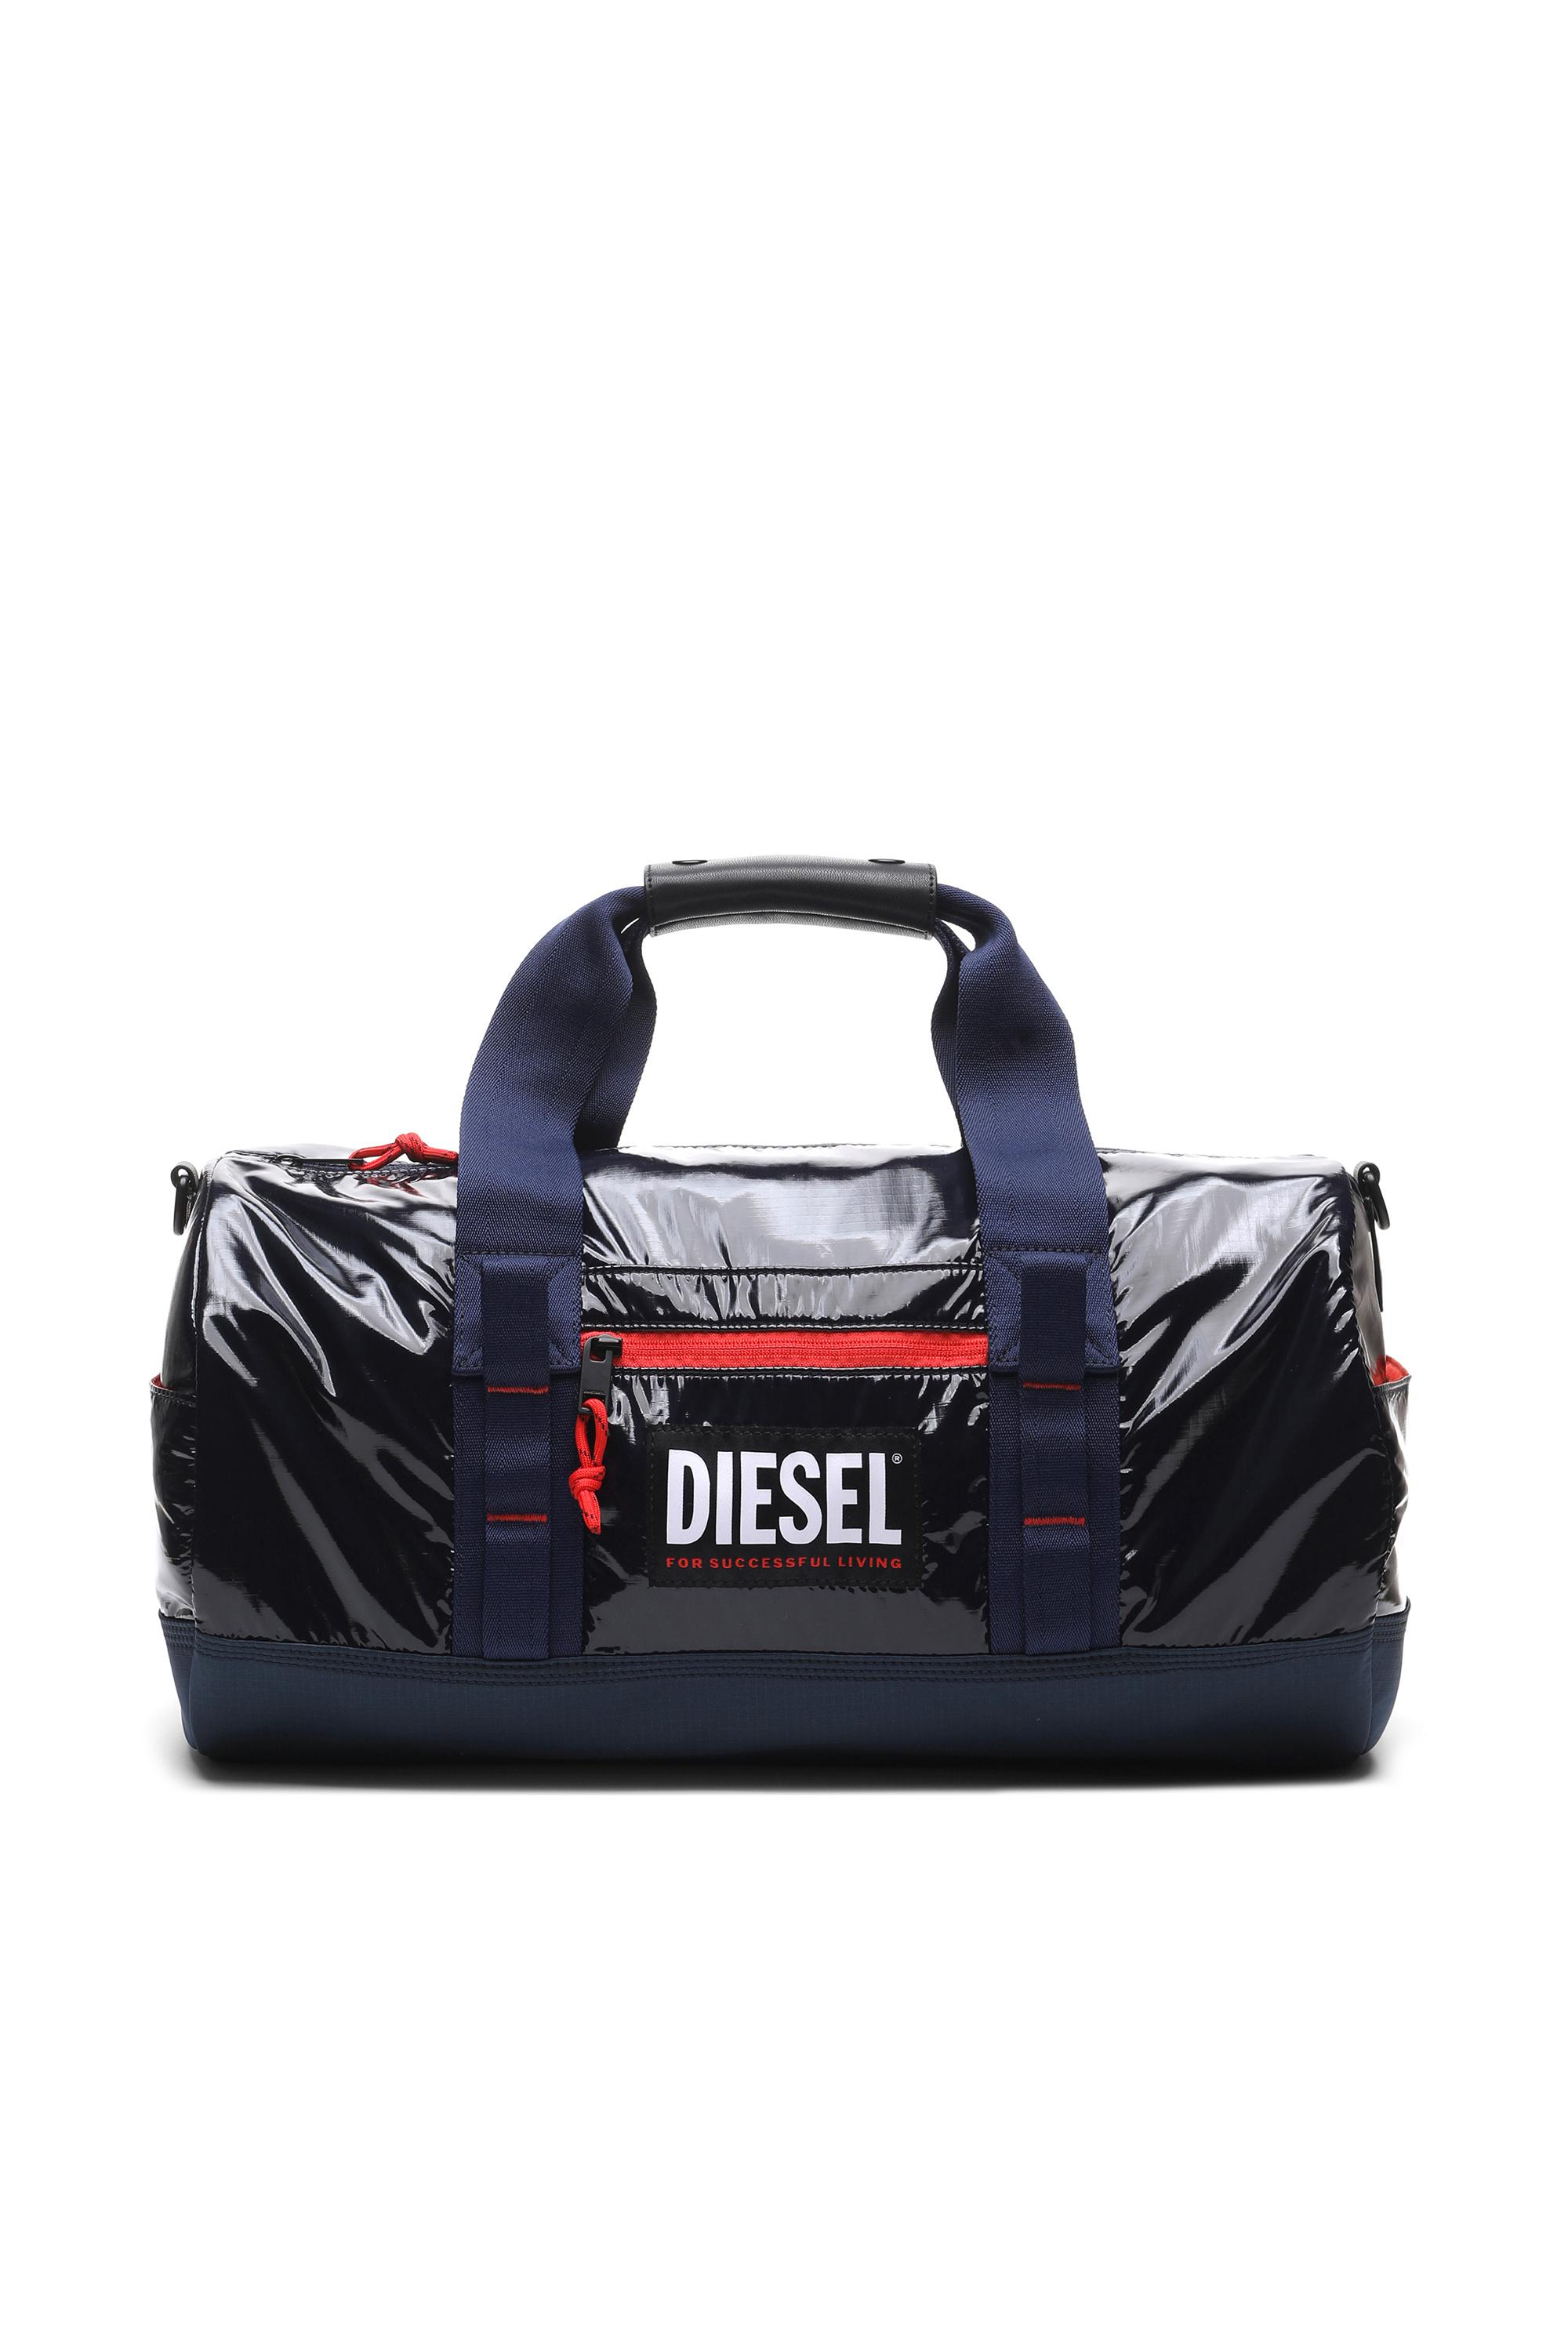 Diesel - YORI, Azul - Image 2